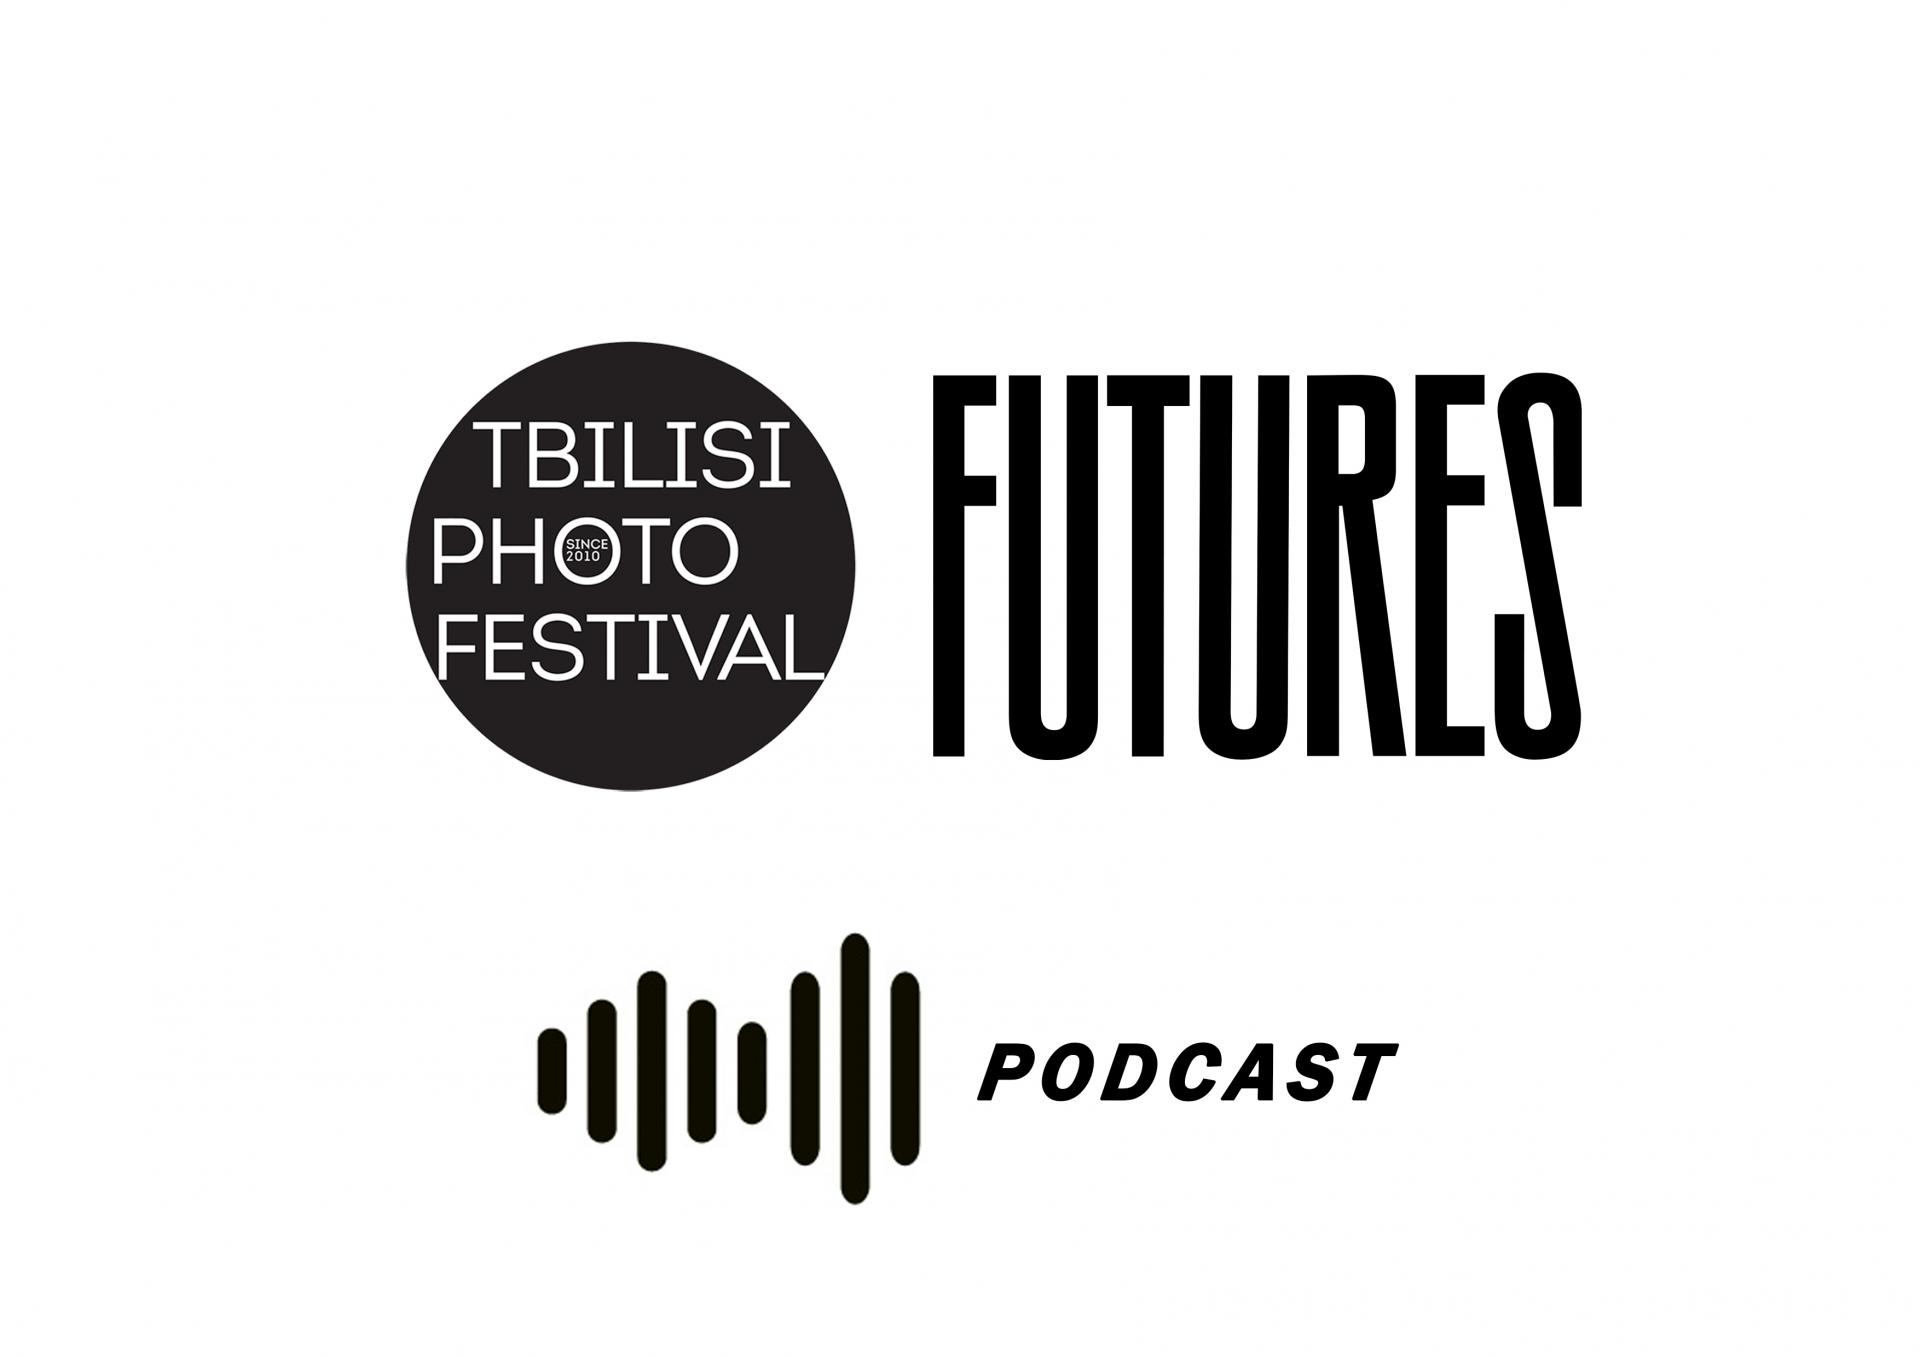 Podcast / Tbilisi Photo Festival X FUTURES